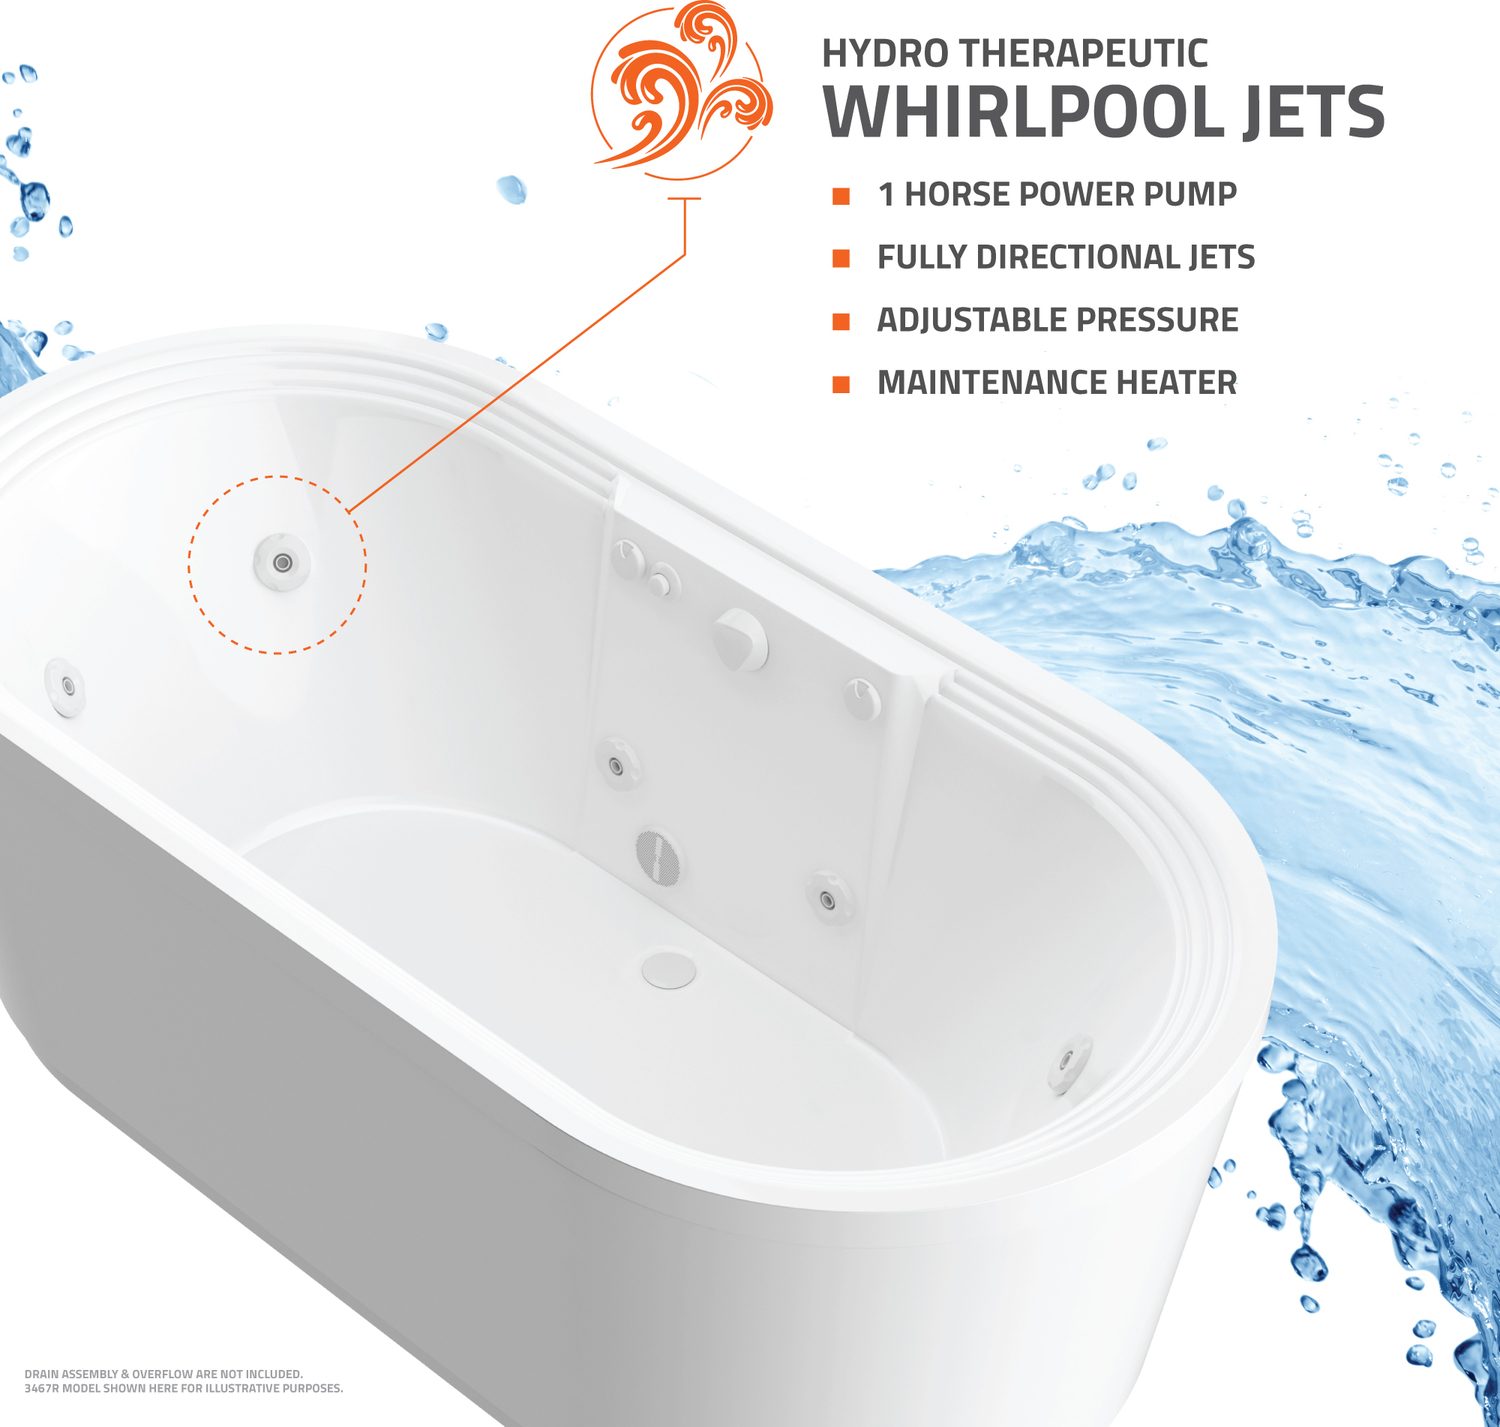  Atlantis BATHROOM - Bathtubs - Freestanding Bathtubs - Two Piece - Whirlpool White